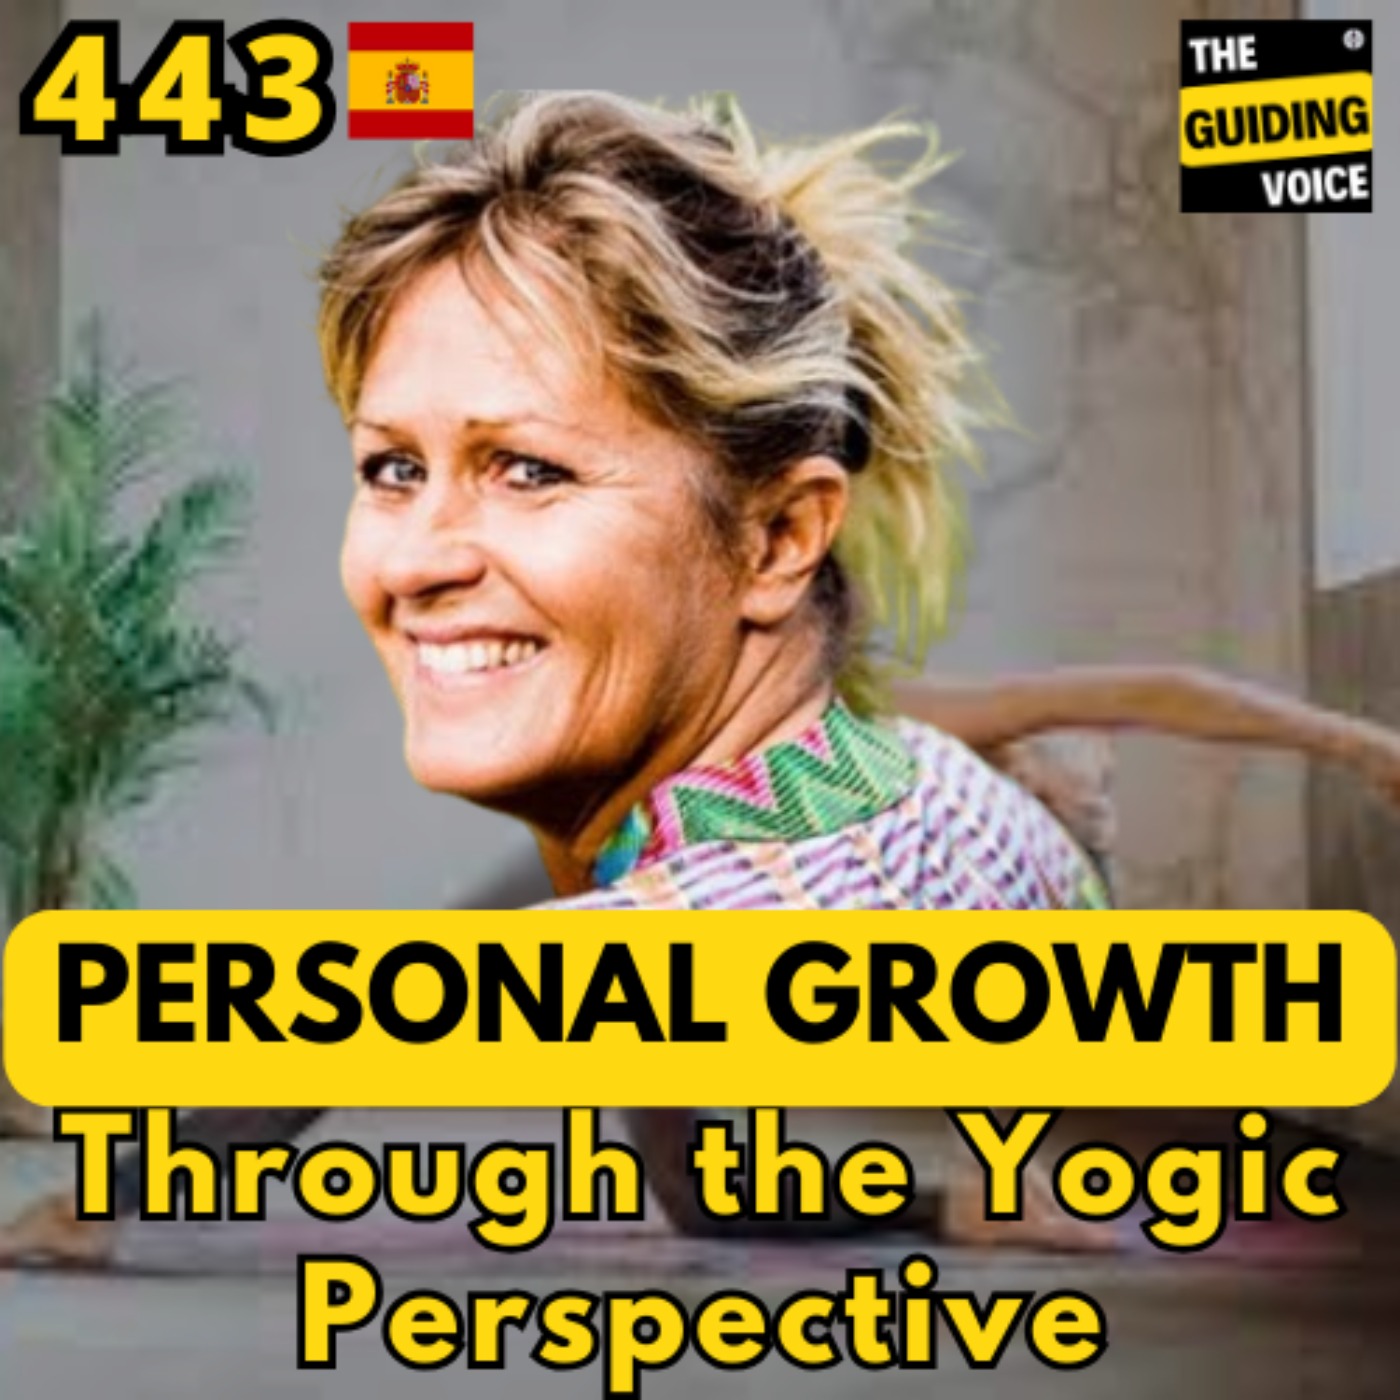 Personal growth through the Yogic perspective | #TGVGLOBALSPEAKERFESTIVAL | Ulrika(Ullis) Karlsson | #TGV443